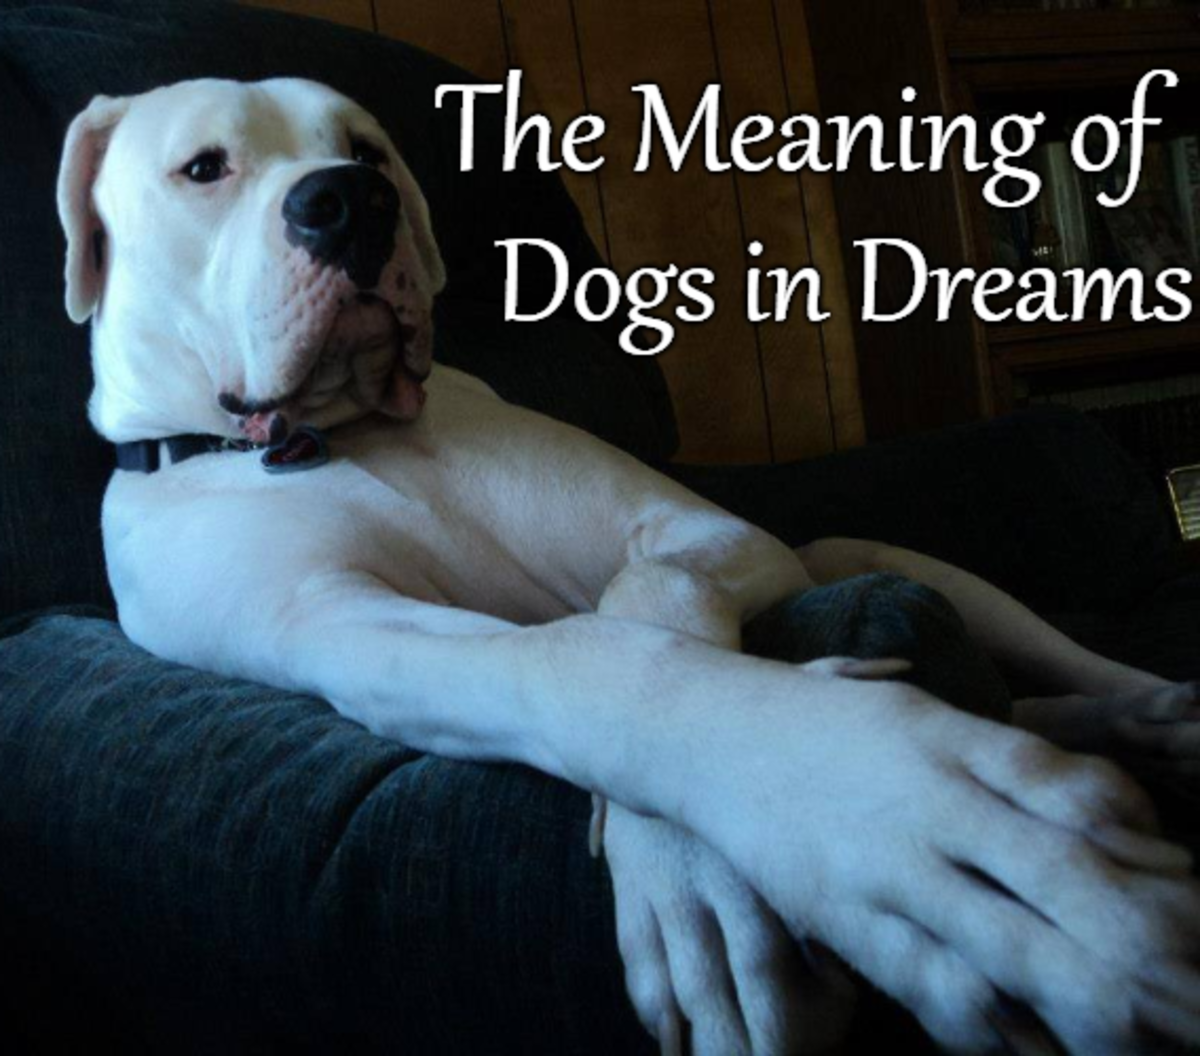  Drøm om at redde hund (heldig fortolkning)